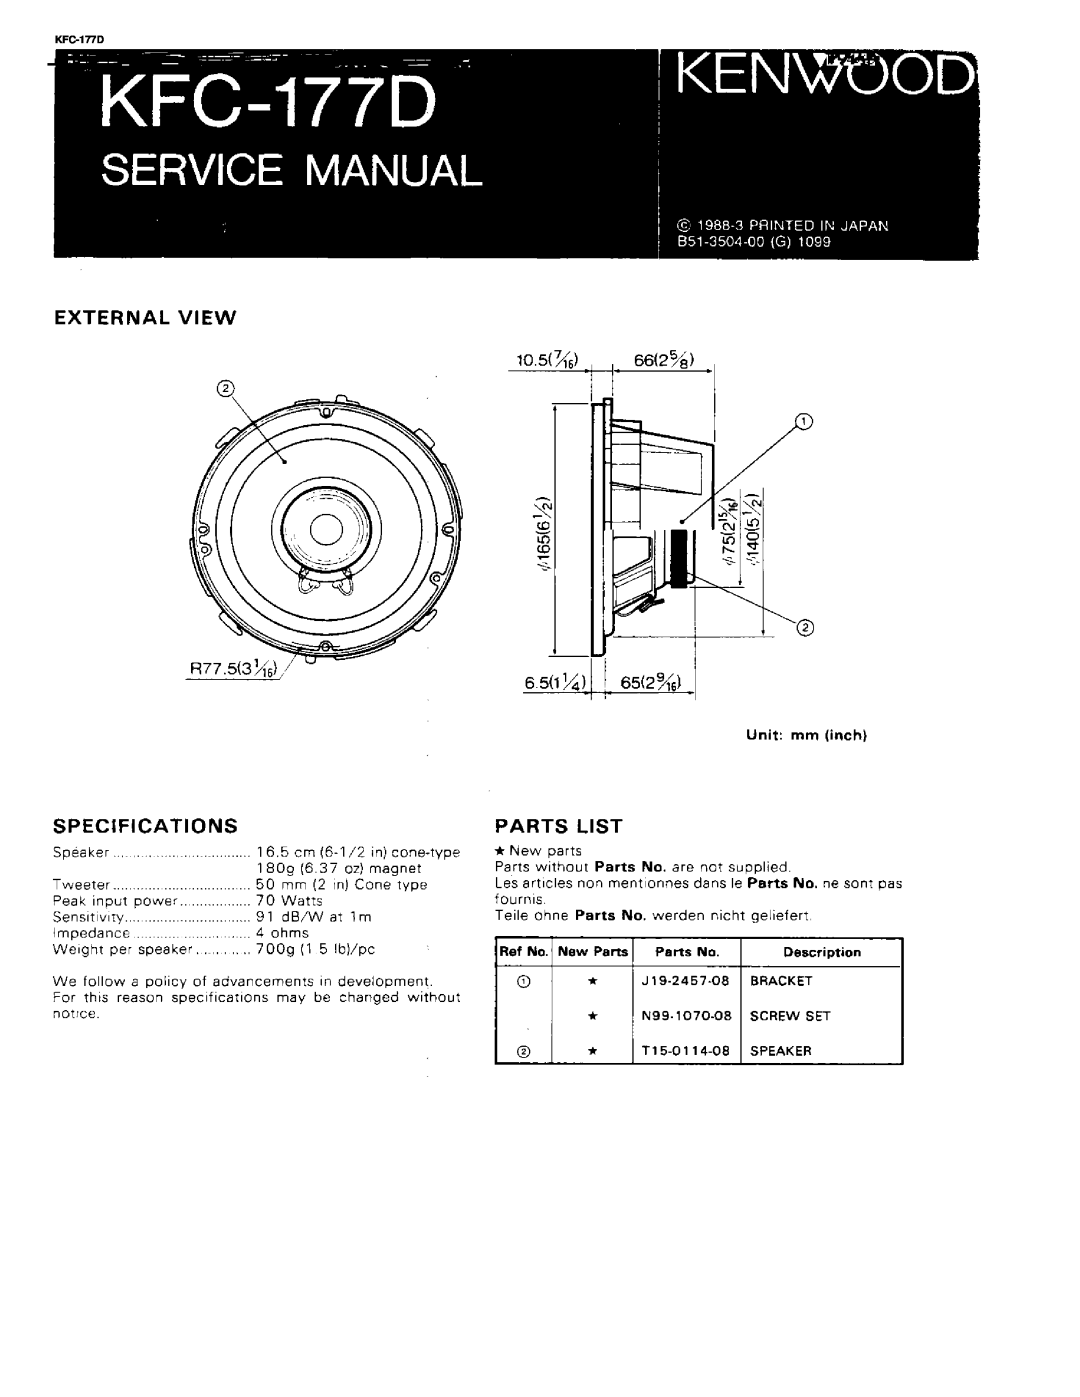 Kenwood KFC-177D manual 